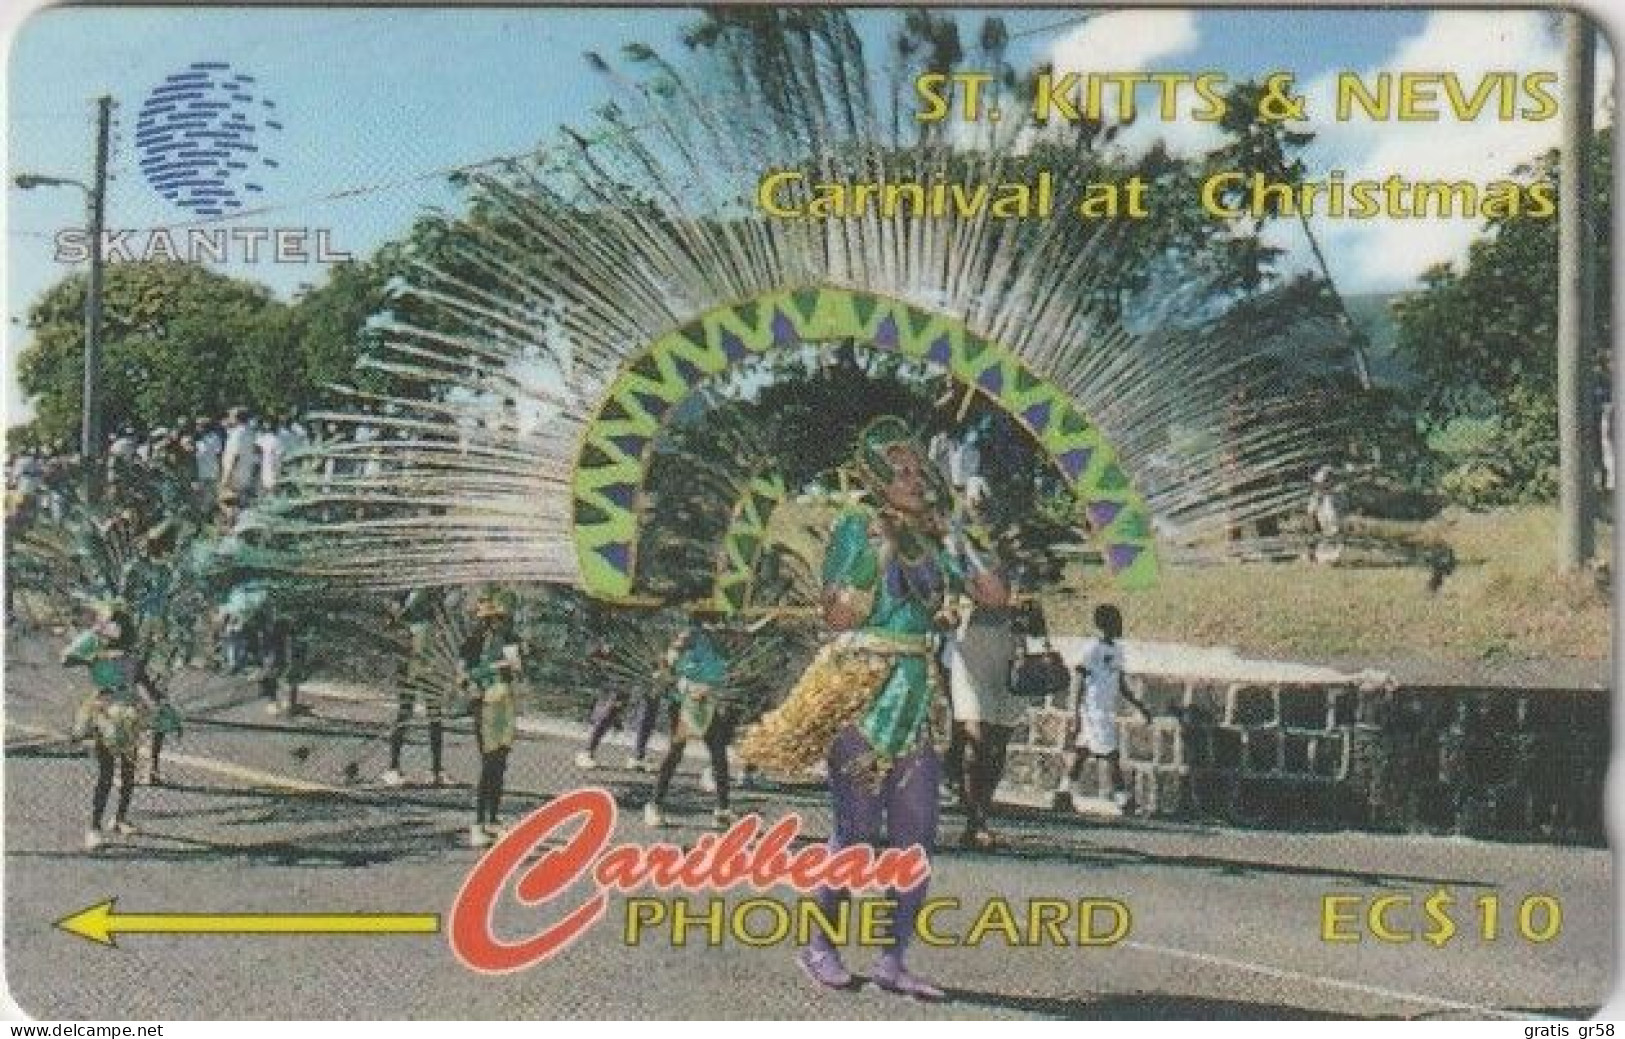 St. Kitts & Nevis - STK-16A, GPT, 16CSKA, Carnival At Christmas 2, 10 EC$, 400ex, 1995, Used - Saint Kitts & Nevis